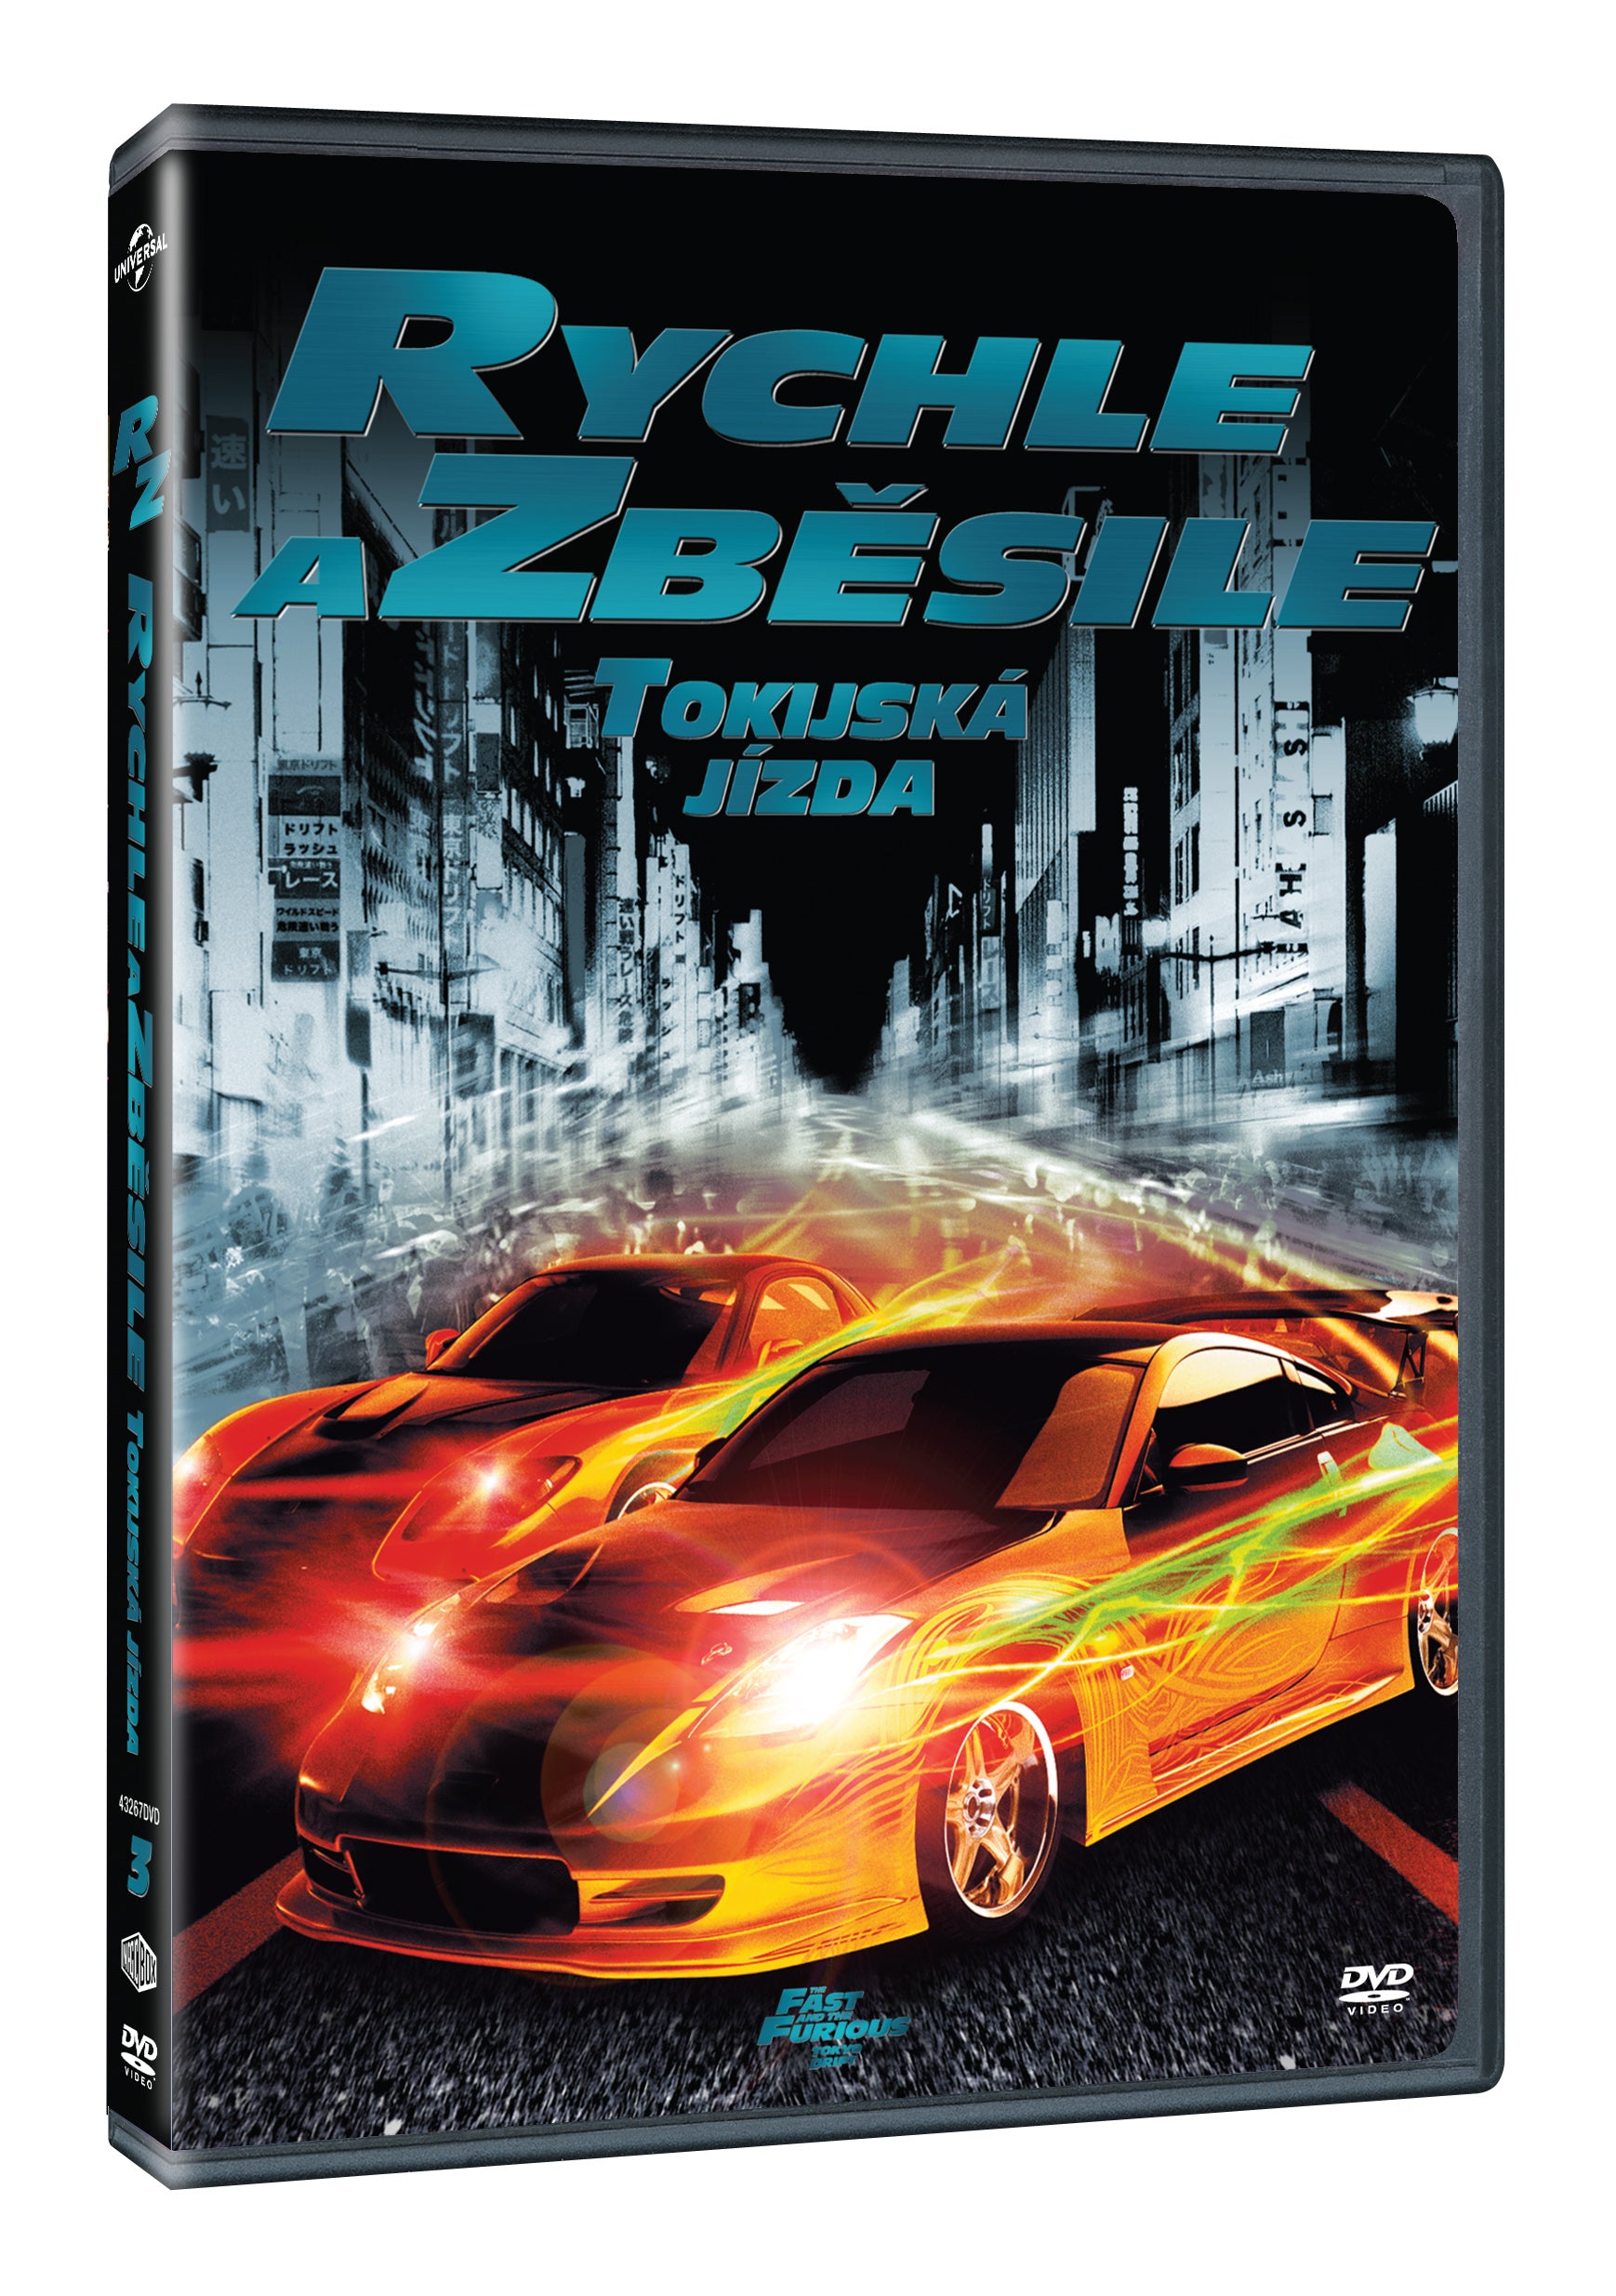 Weiterlesen: Tokijska jizda DVD / The Fast and the Furious: Tokyo Drift